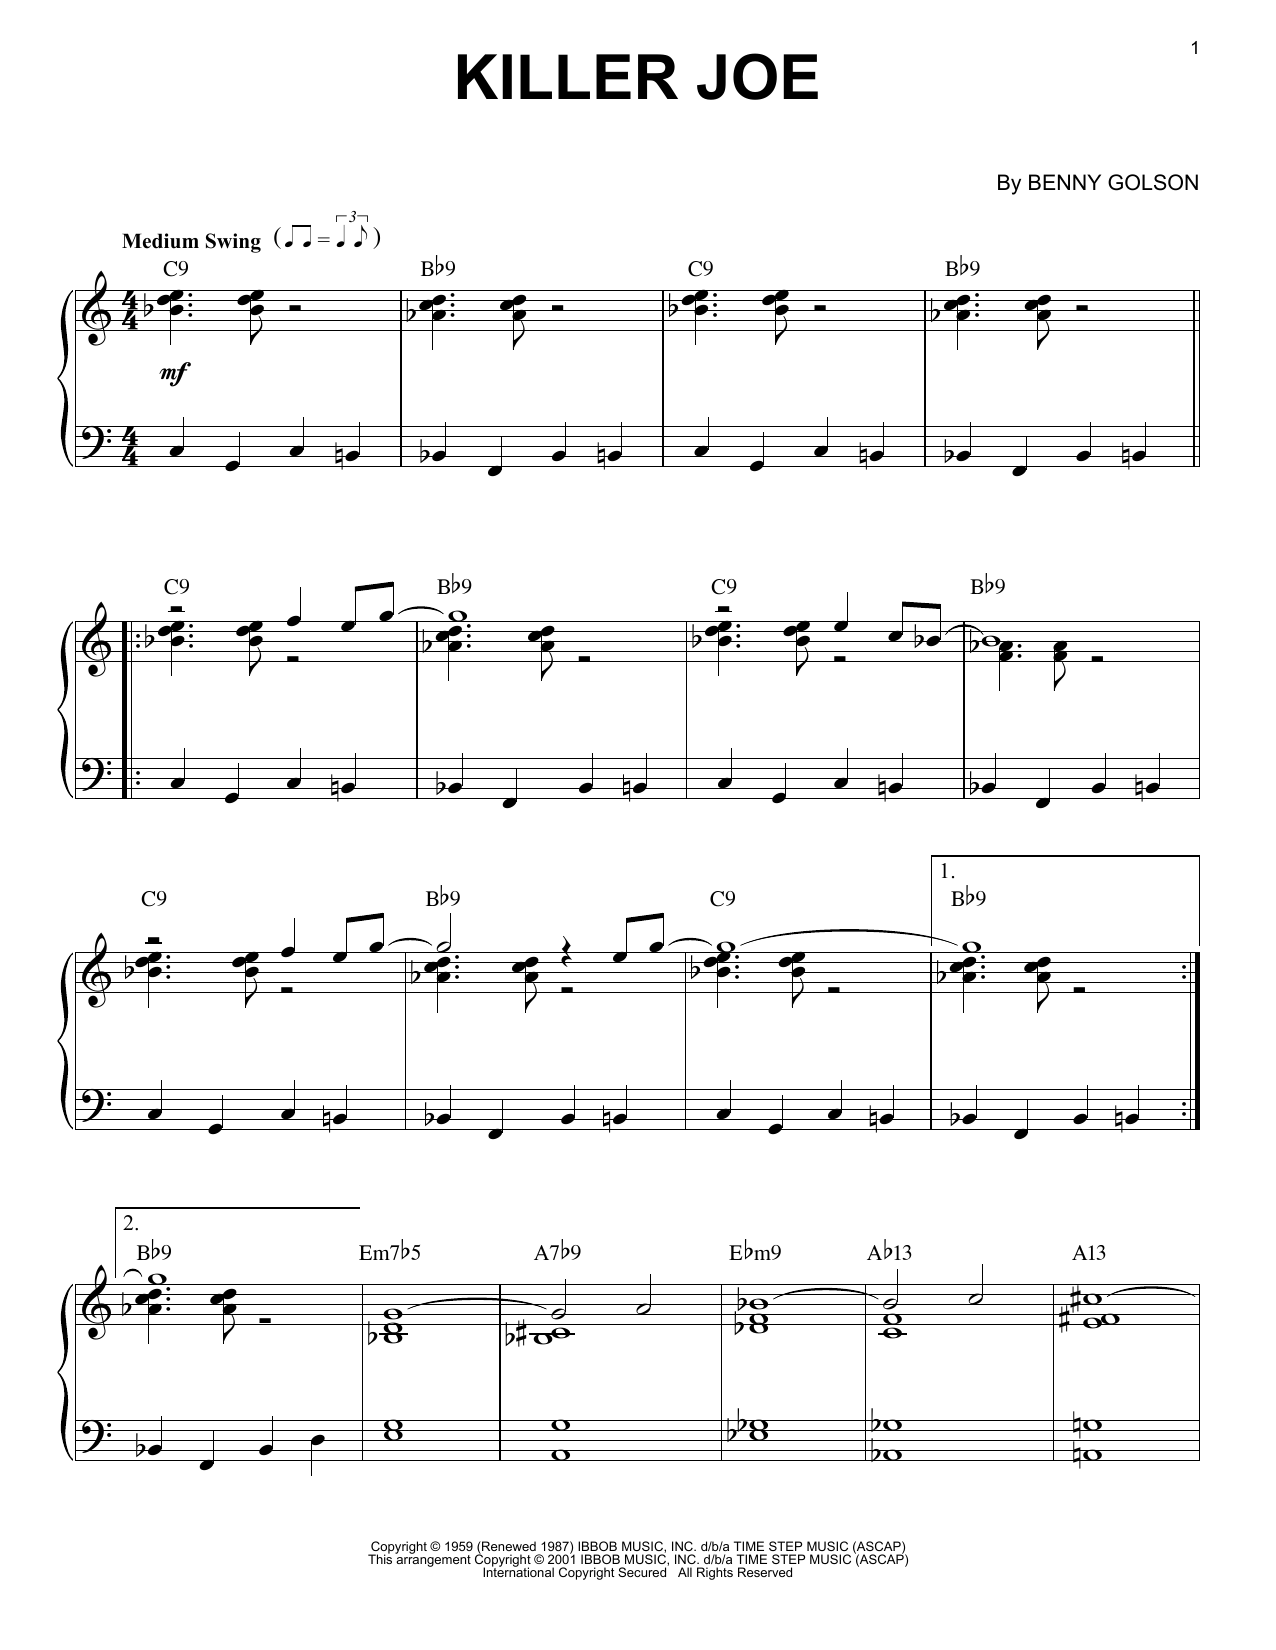 Benny Golson Killer Joe Sheet Music Notes & Chords for Guitar Ensemble - Download or Print PDF